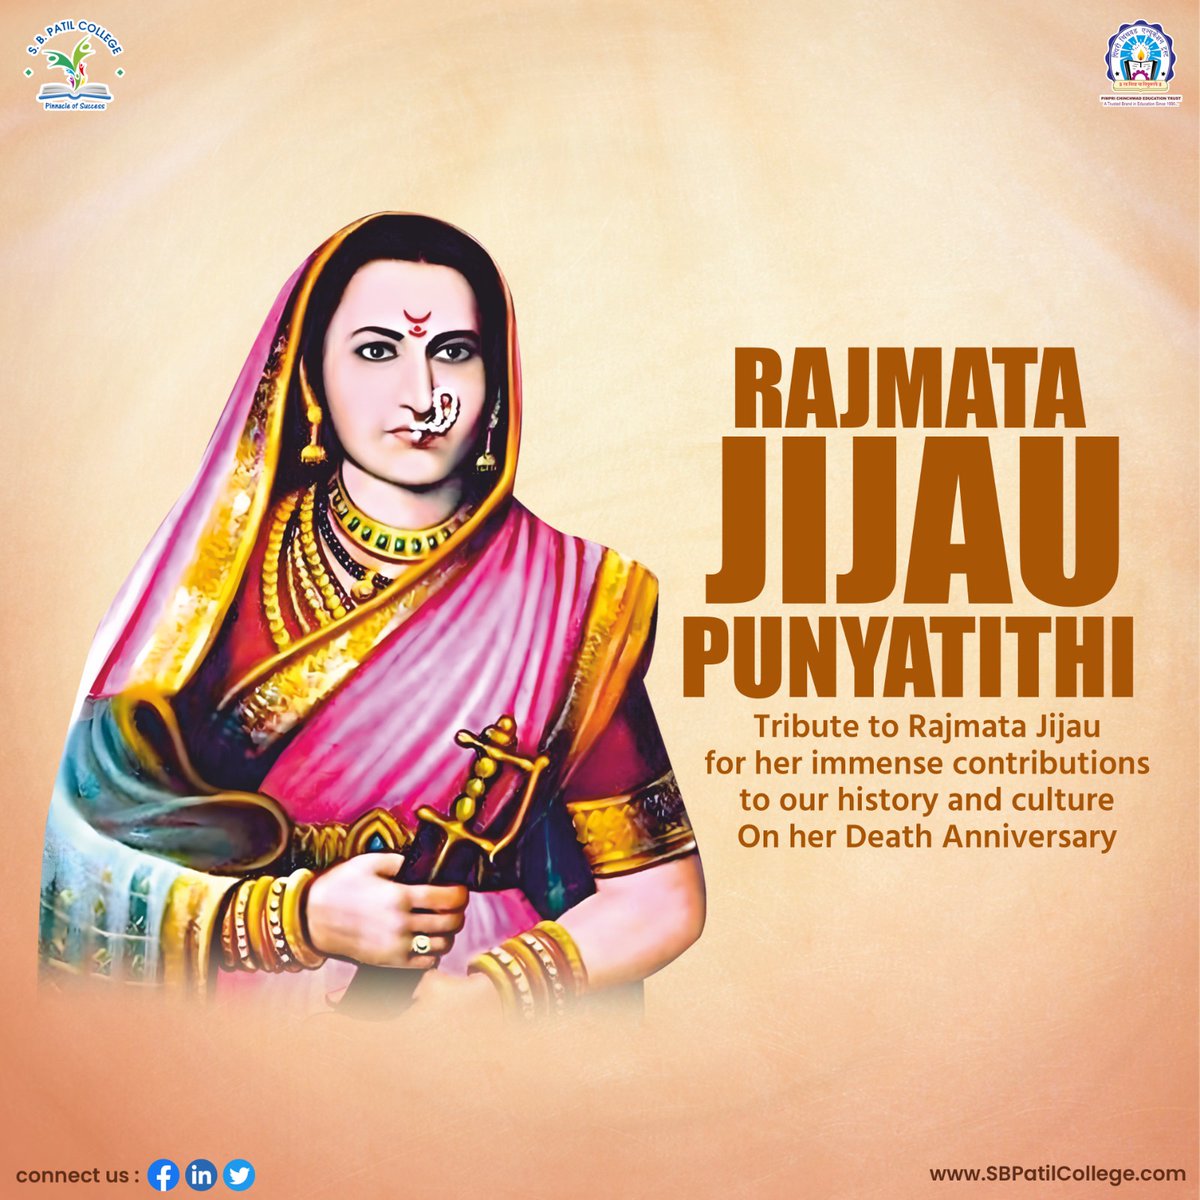 Let's pay #tribute to #𝑹𝒂𝒋𝒎𝒂𝒕𝒂𝑱𝒊𝒋𝒂𝒖 on her #DeathAnniversary for her immense contributions to our history & culture.

#PCET #SBPCSC #jijau #maharashtra #shivajimaharaj #shivray #maratha #swarajya #pune #jijaumata #JayJijauJayShivray #DeathAnniversary